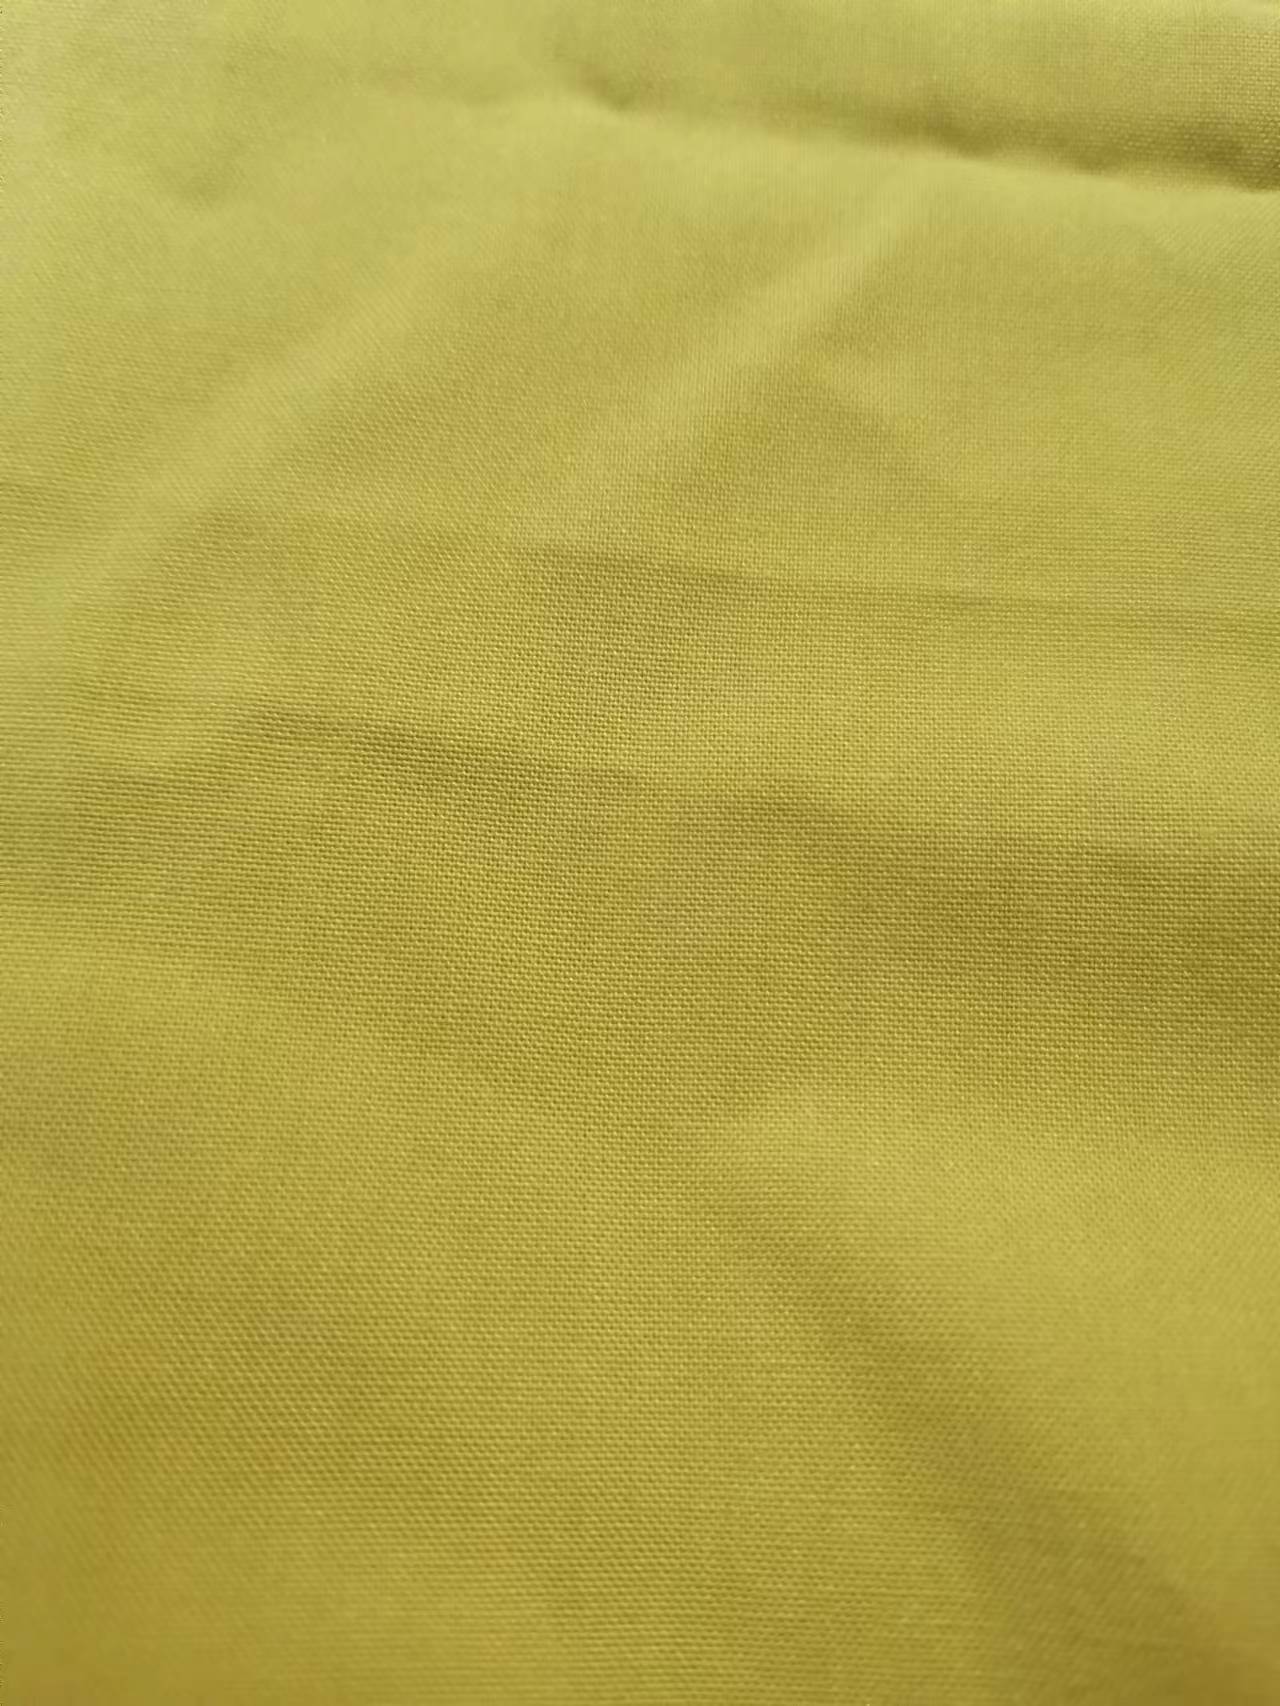 woven cotton Modal Poplin fabric